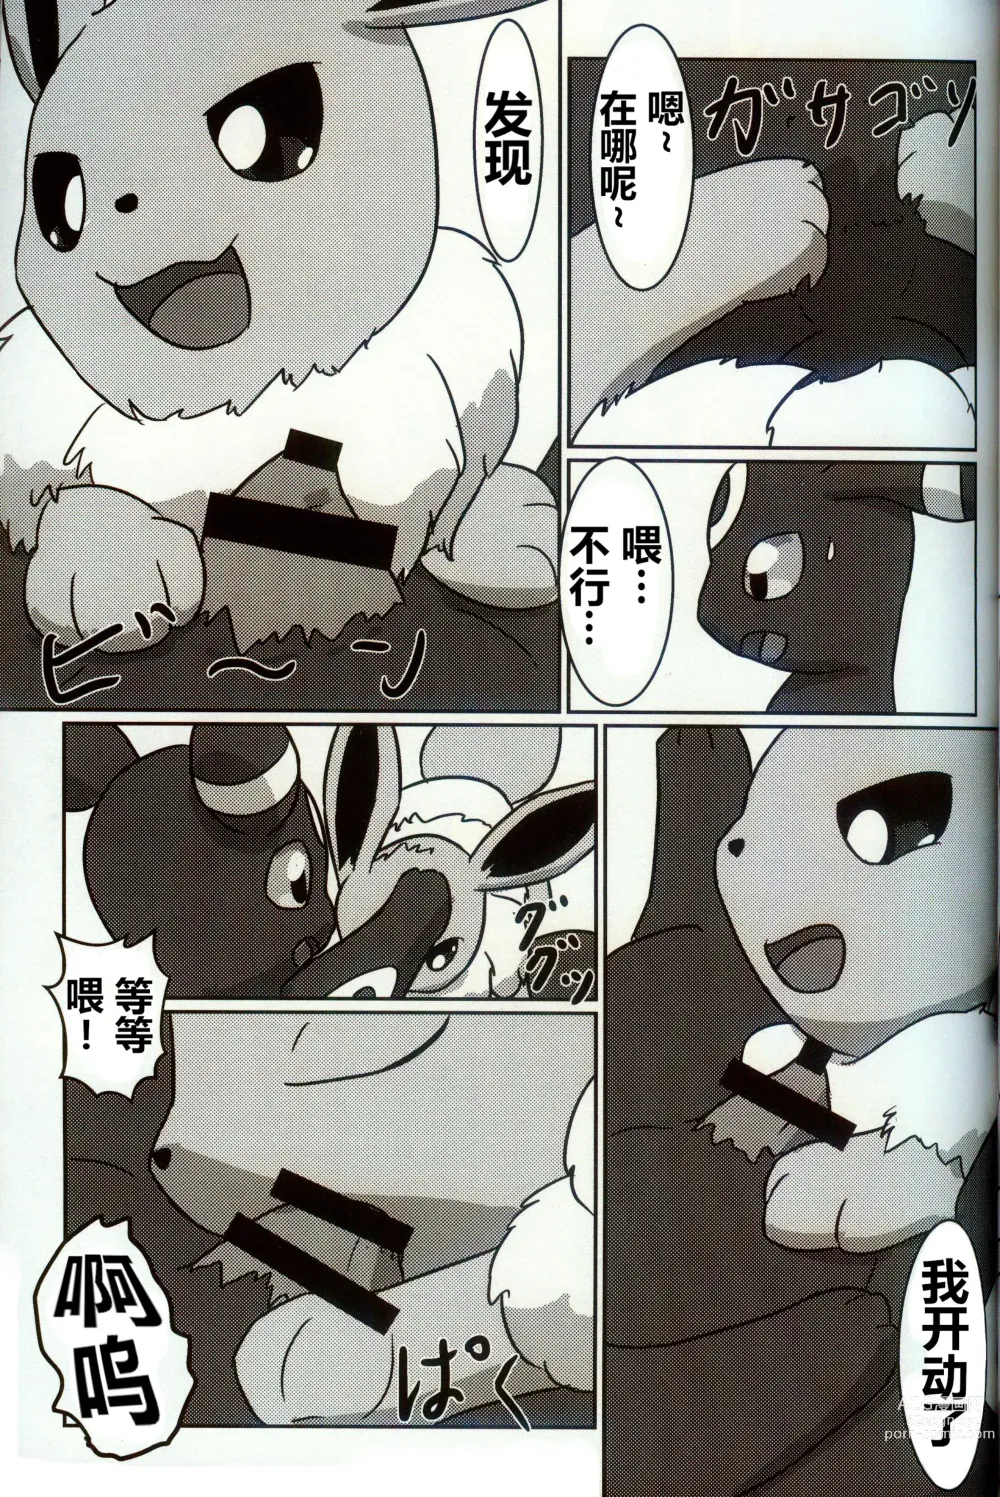 Page 9 of doujinshi 被拜托照顾附近的双胞胎发生了不得了的事...